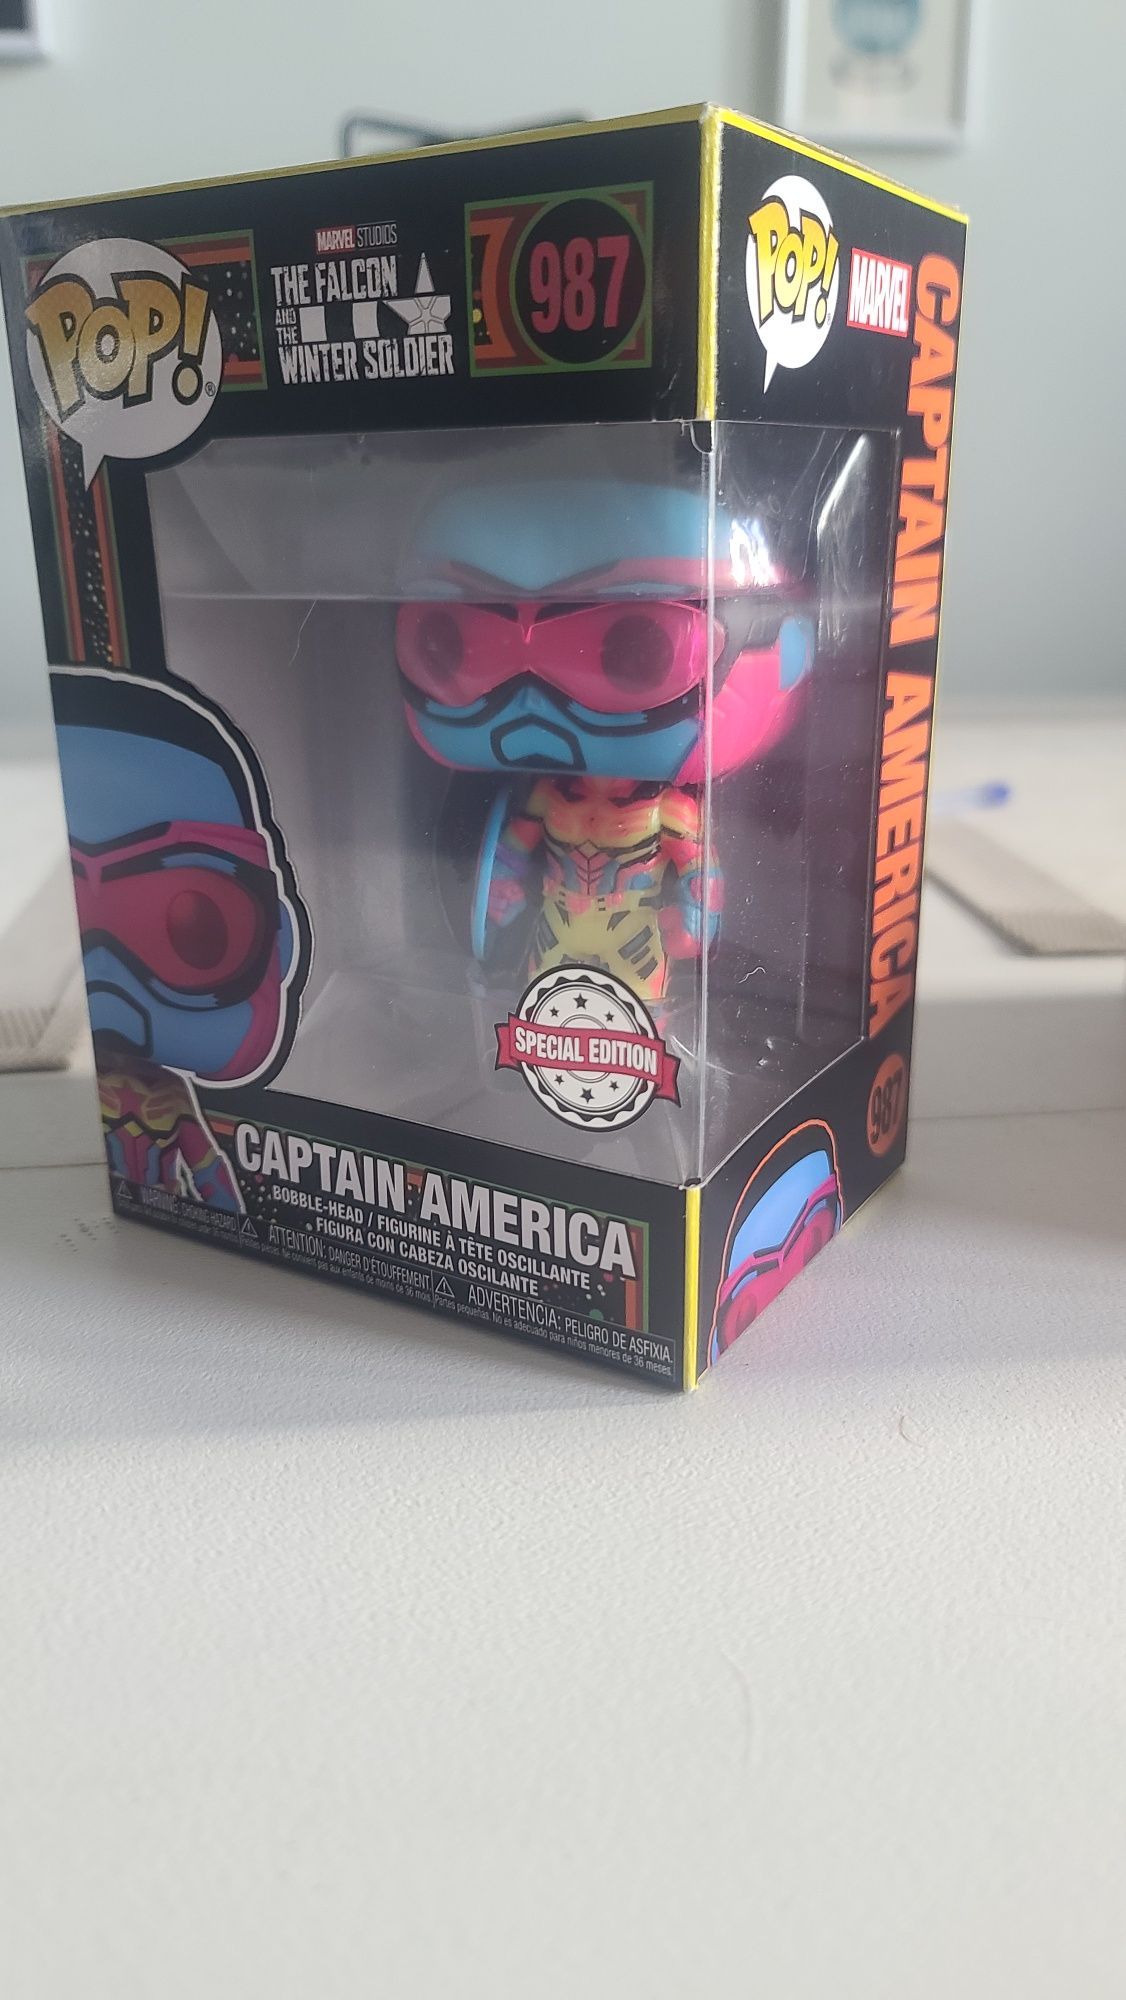 POP! 987 Marvel Capitan America Special Edition